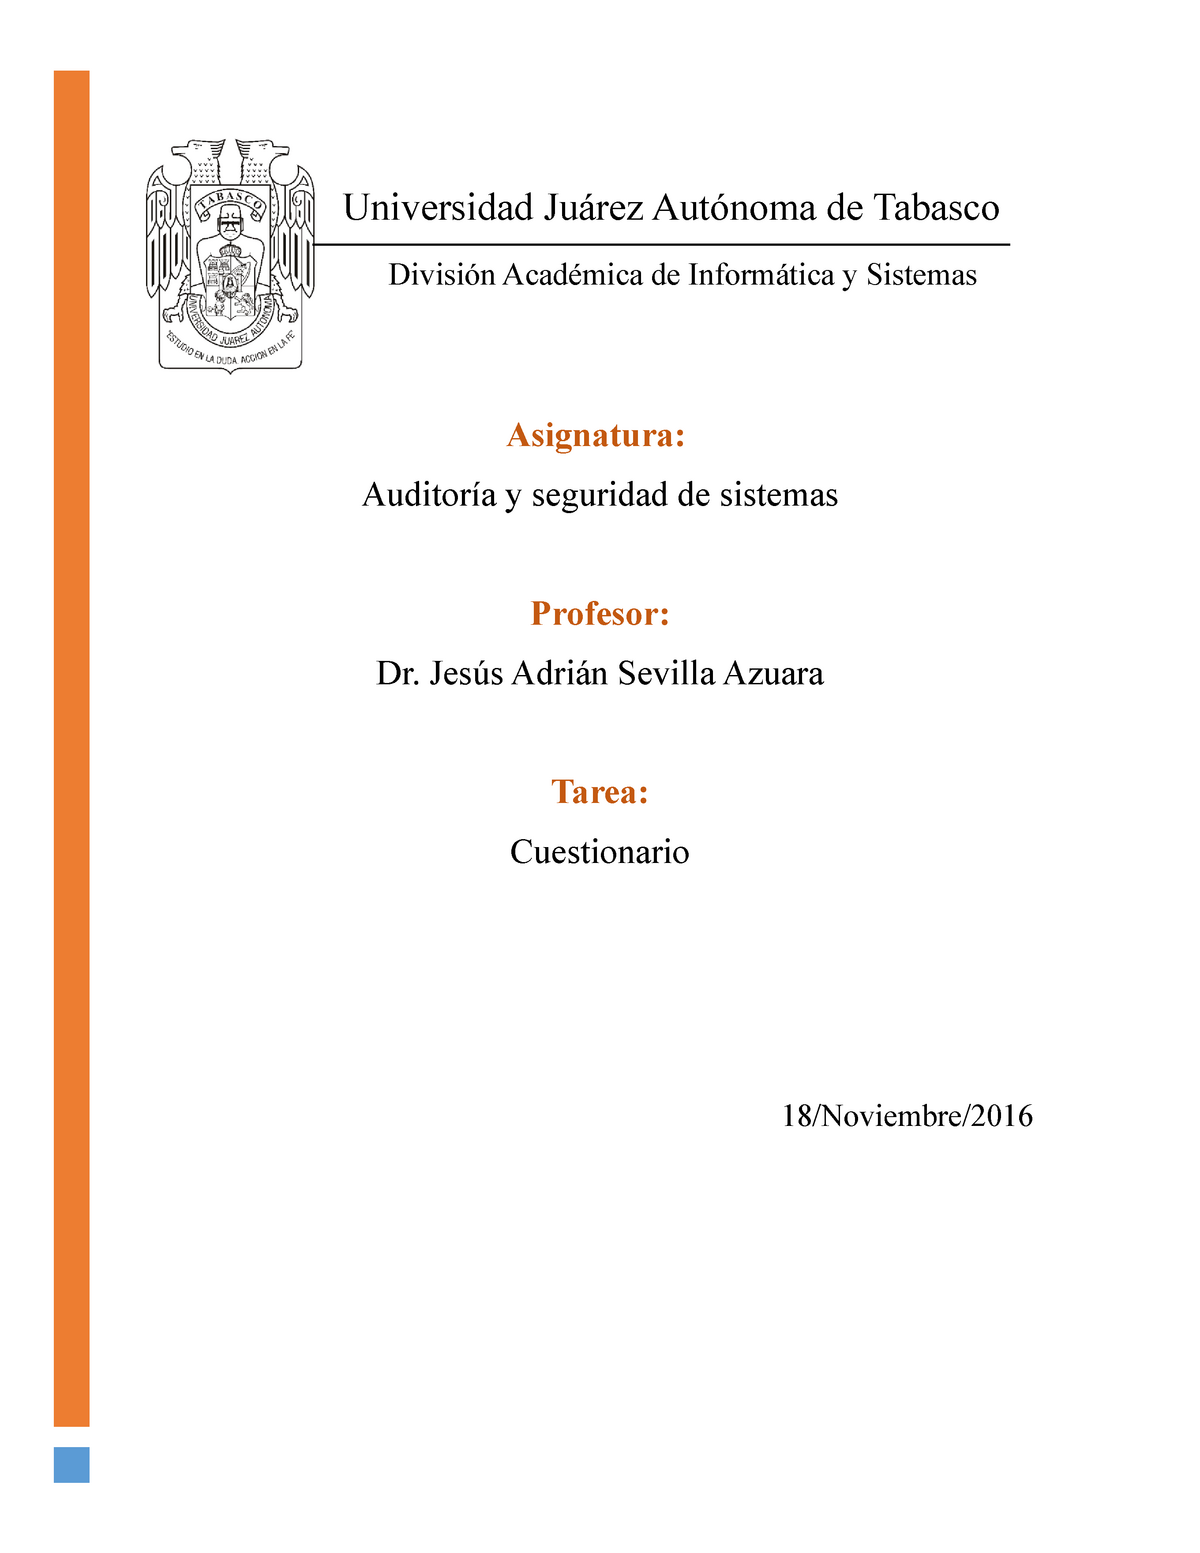 Auditoria en informatica jose antonio echenique pdf - junkiesend